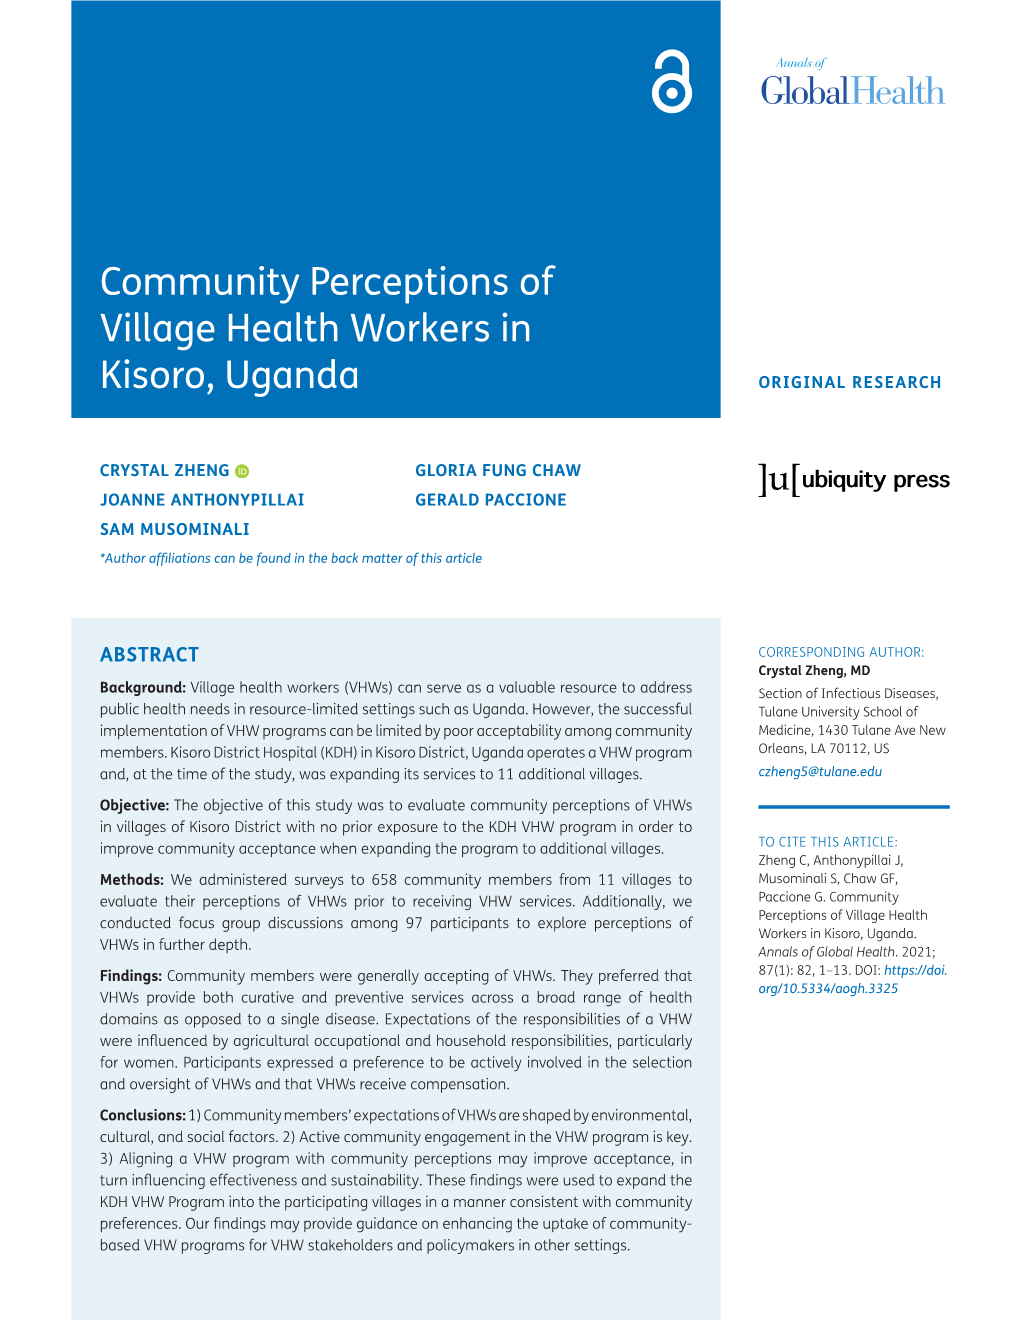 Community Perceptions of Village Health Workers in Kisoro, Uganda